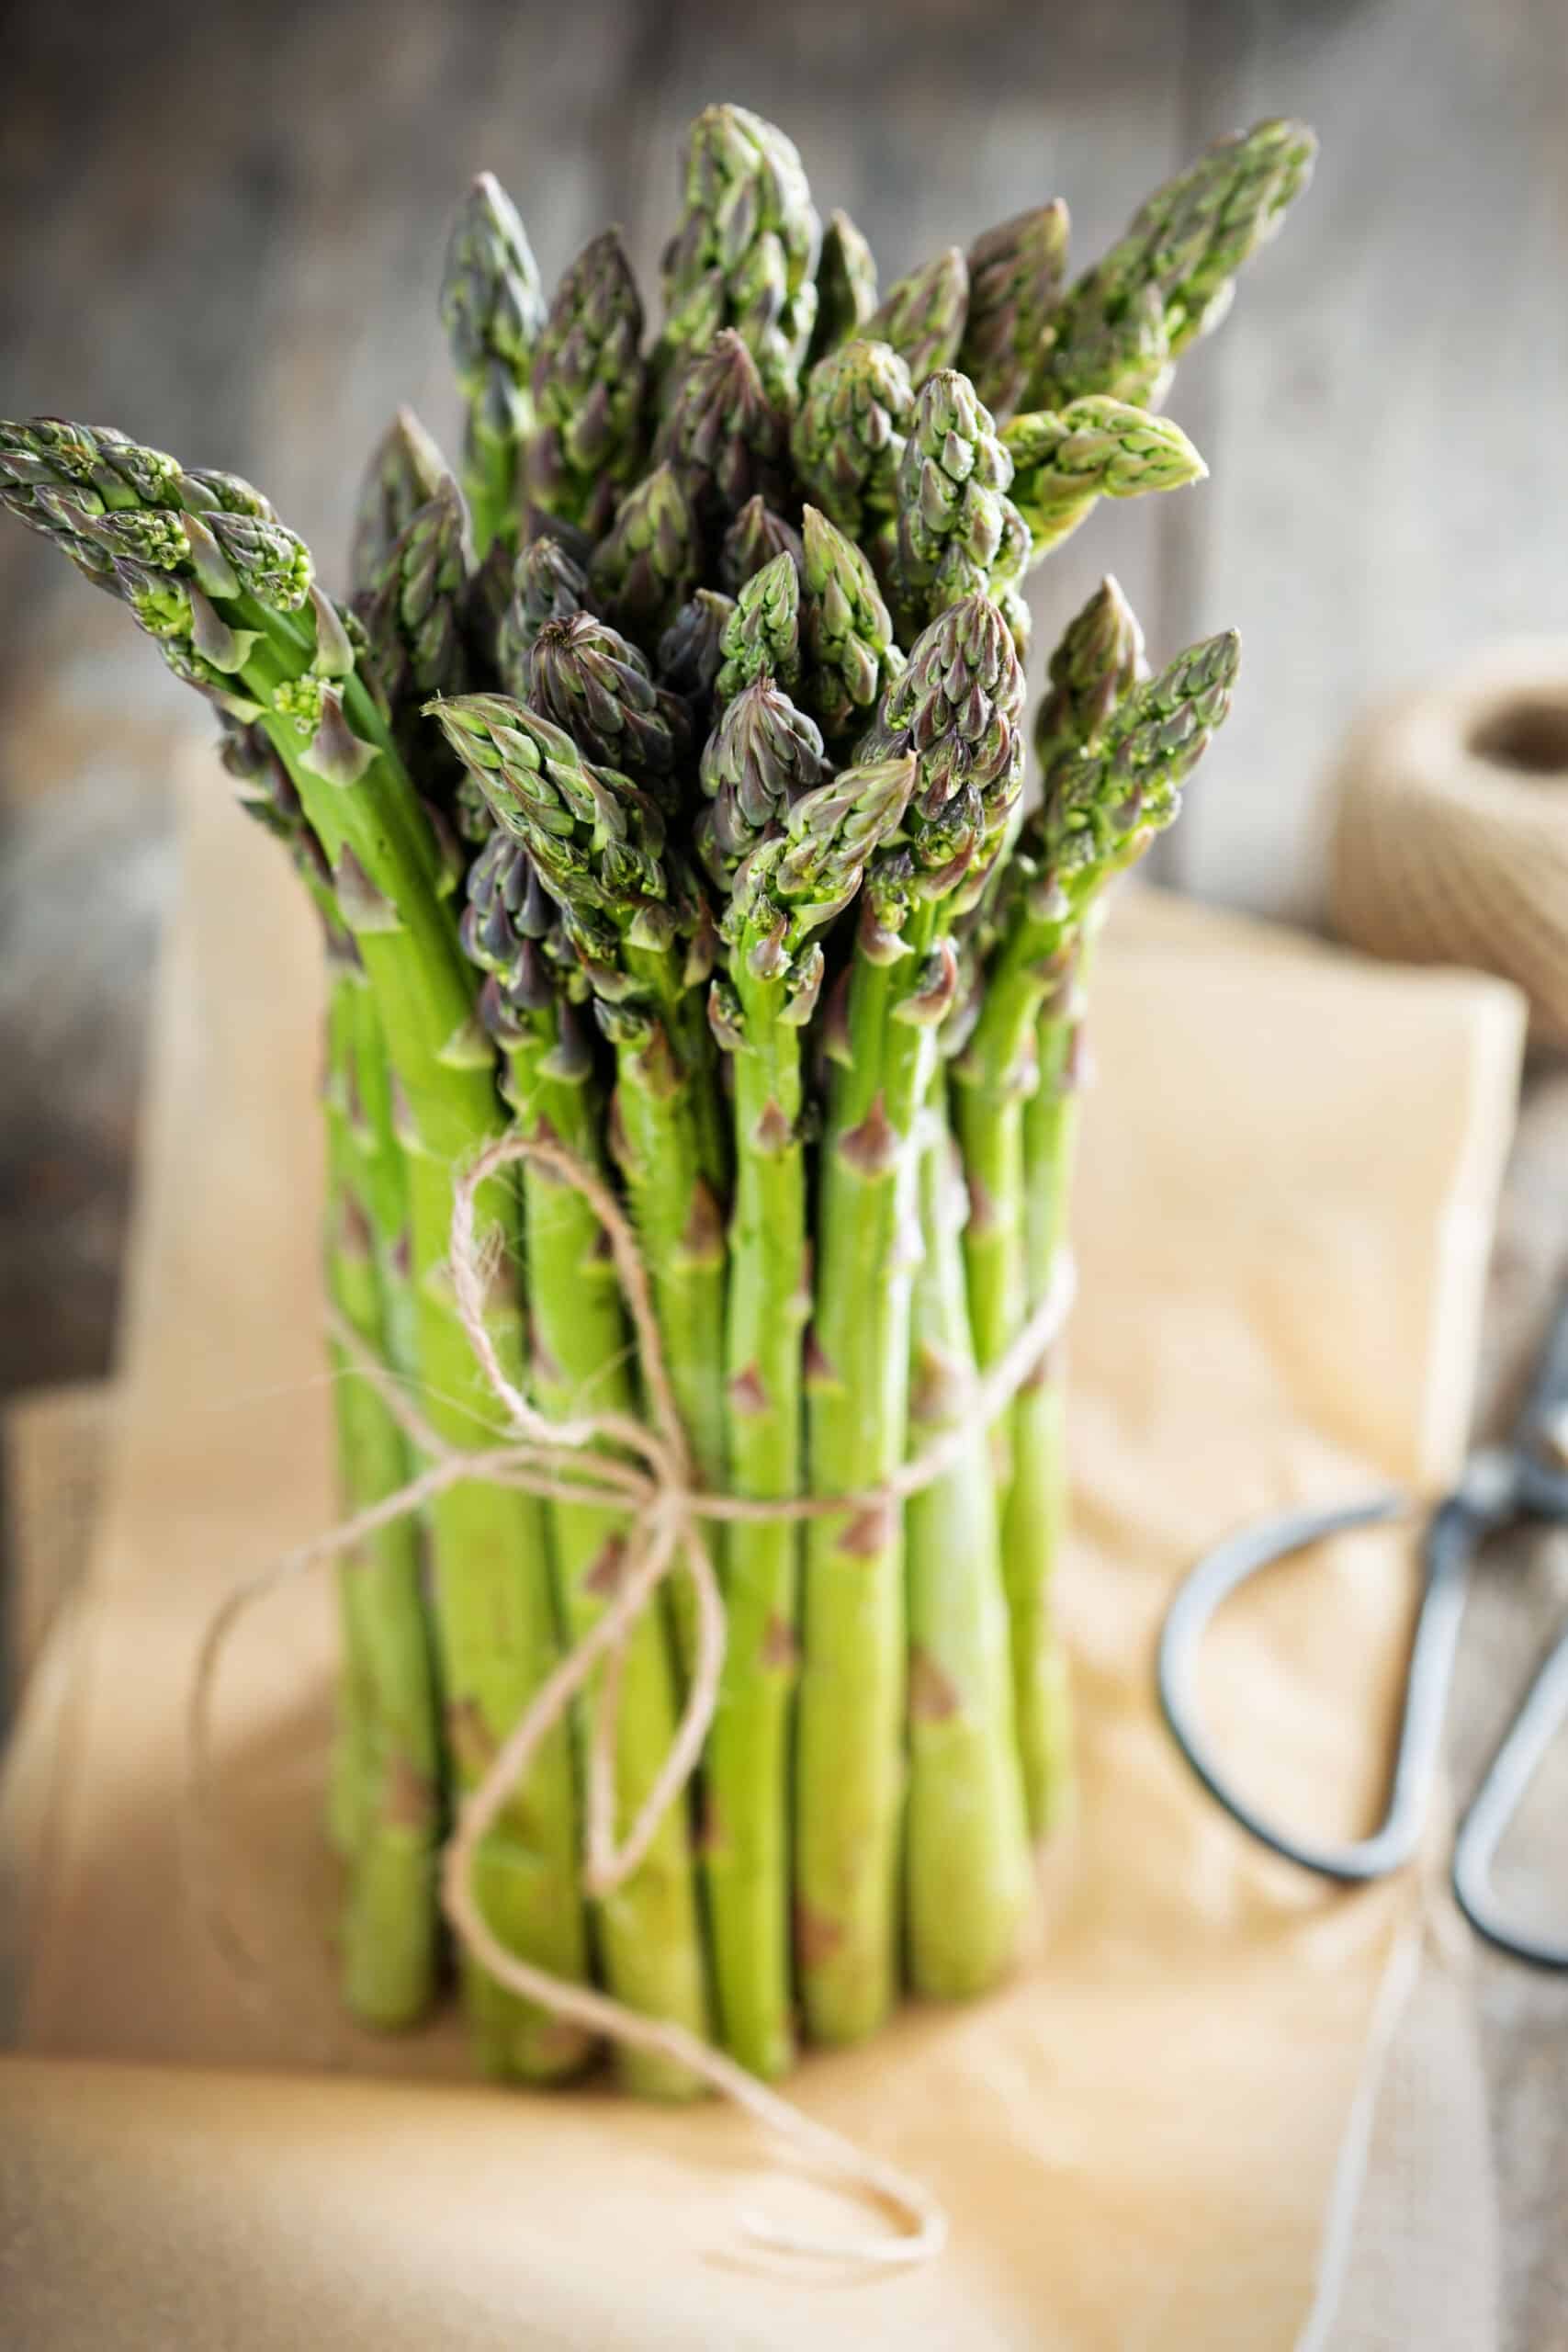 Store asparagus